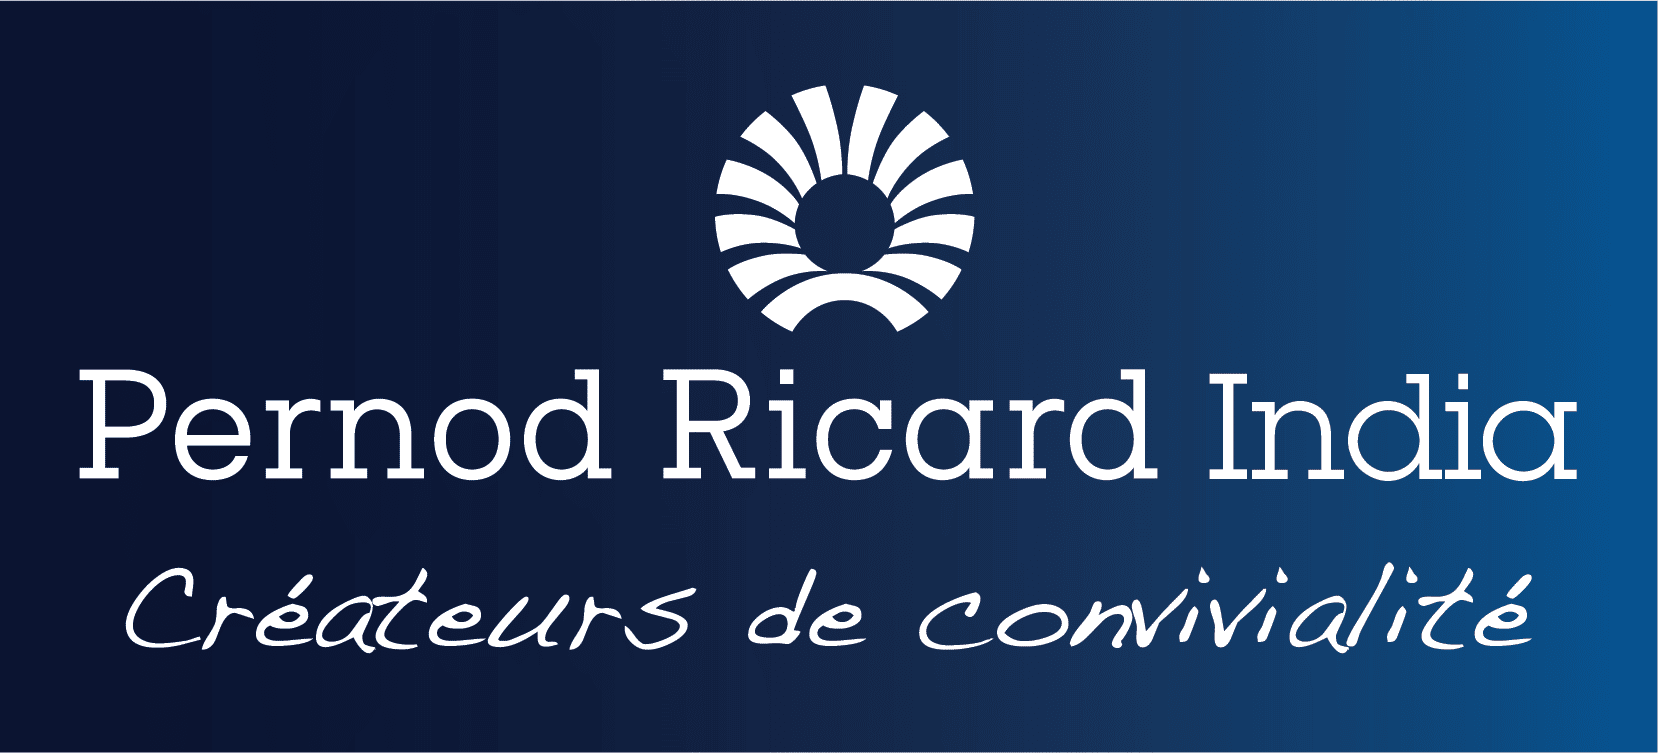 Pernod Ricard India logo